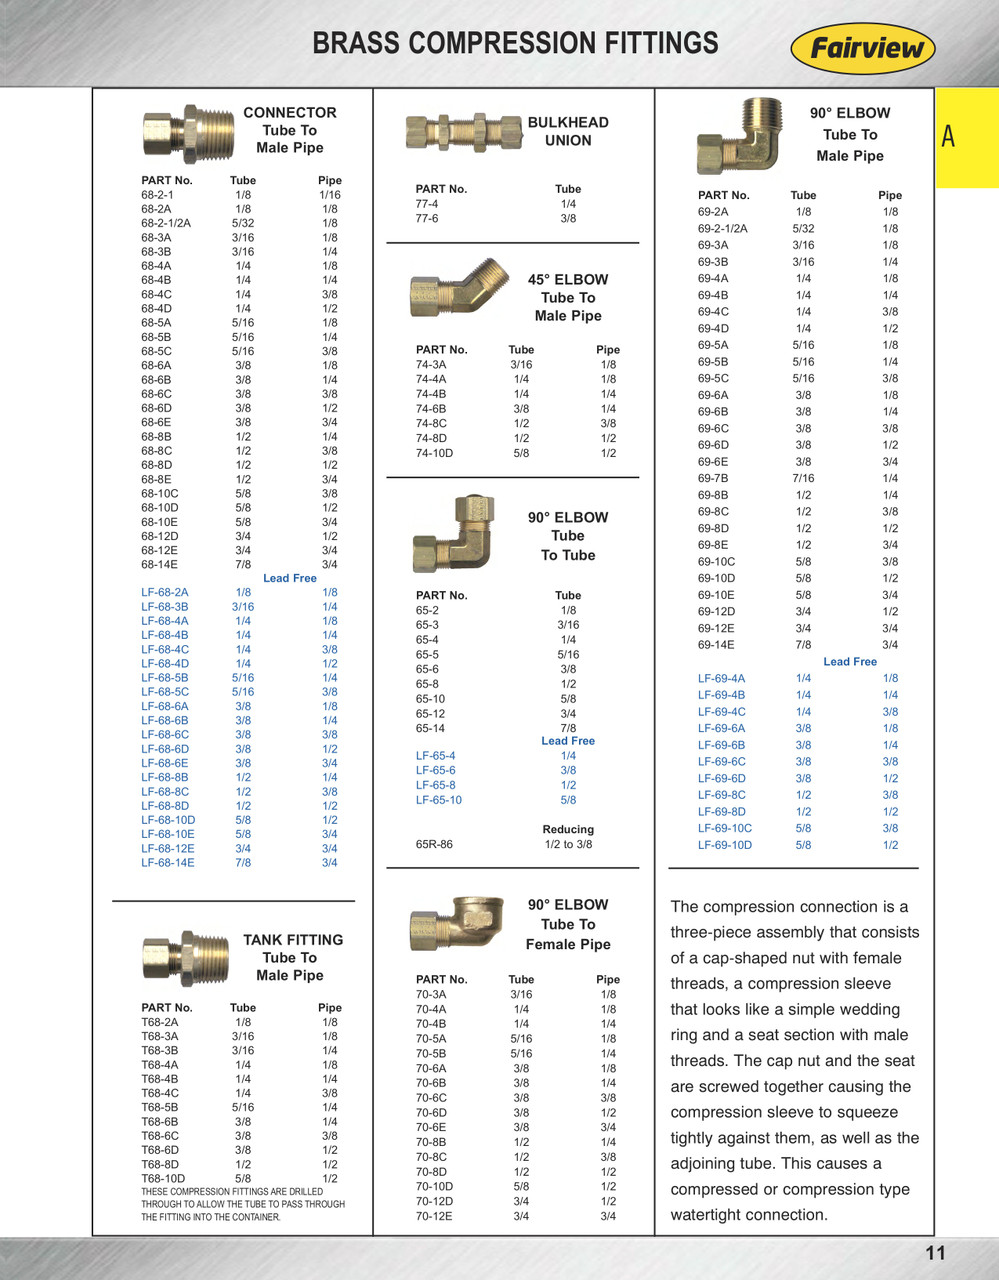 1/4 x 3/8" Lead Free Brass Compression - Male NPT  90° Elbow  LF-69-4C